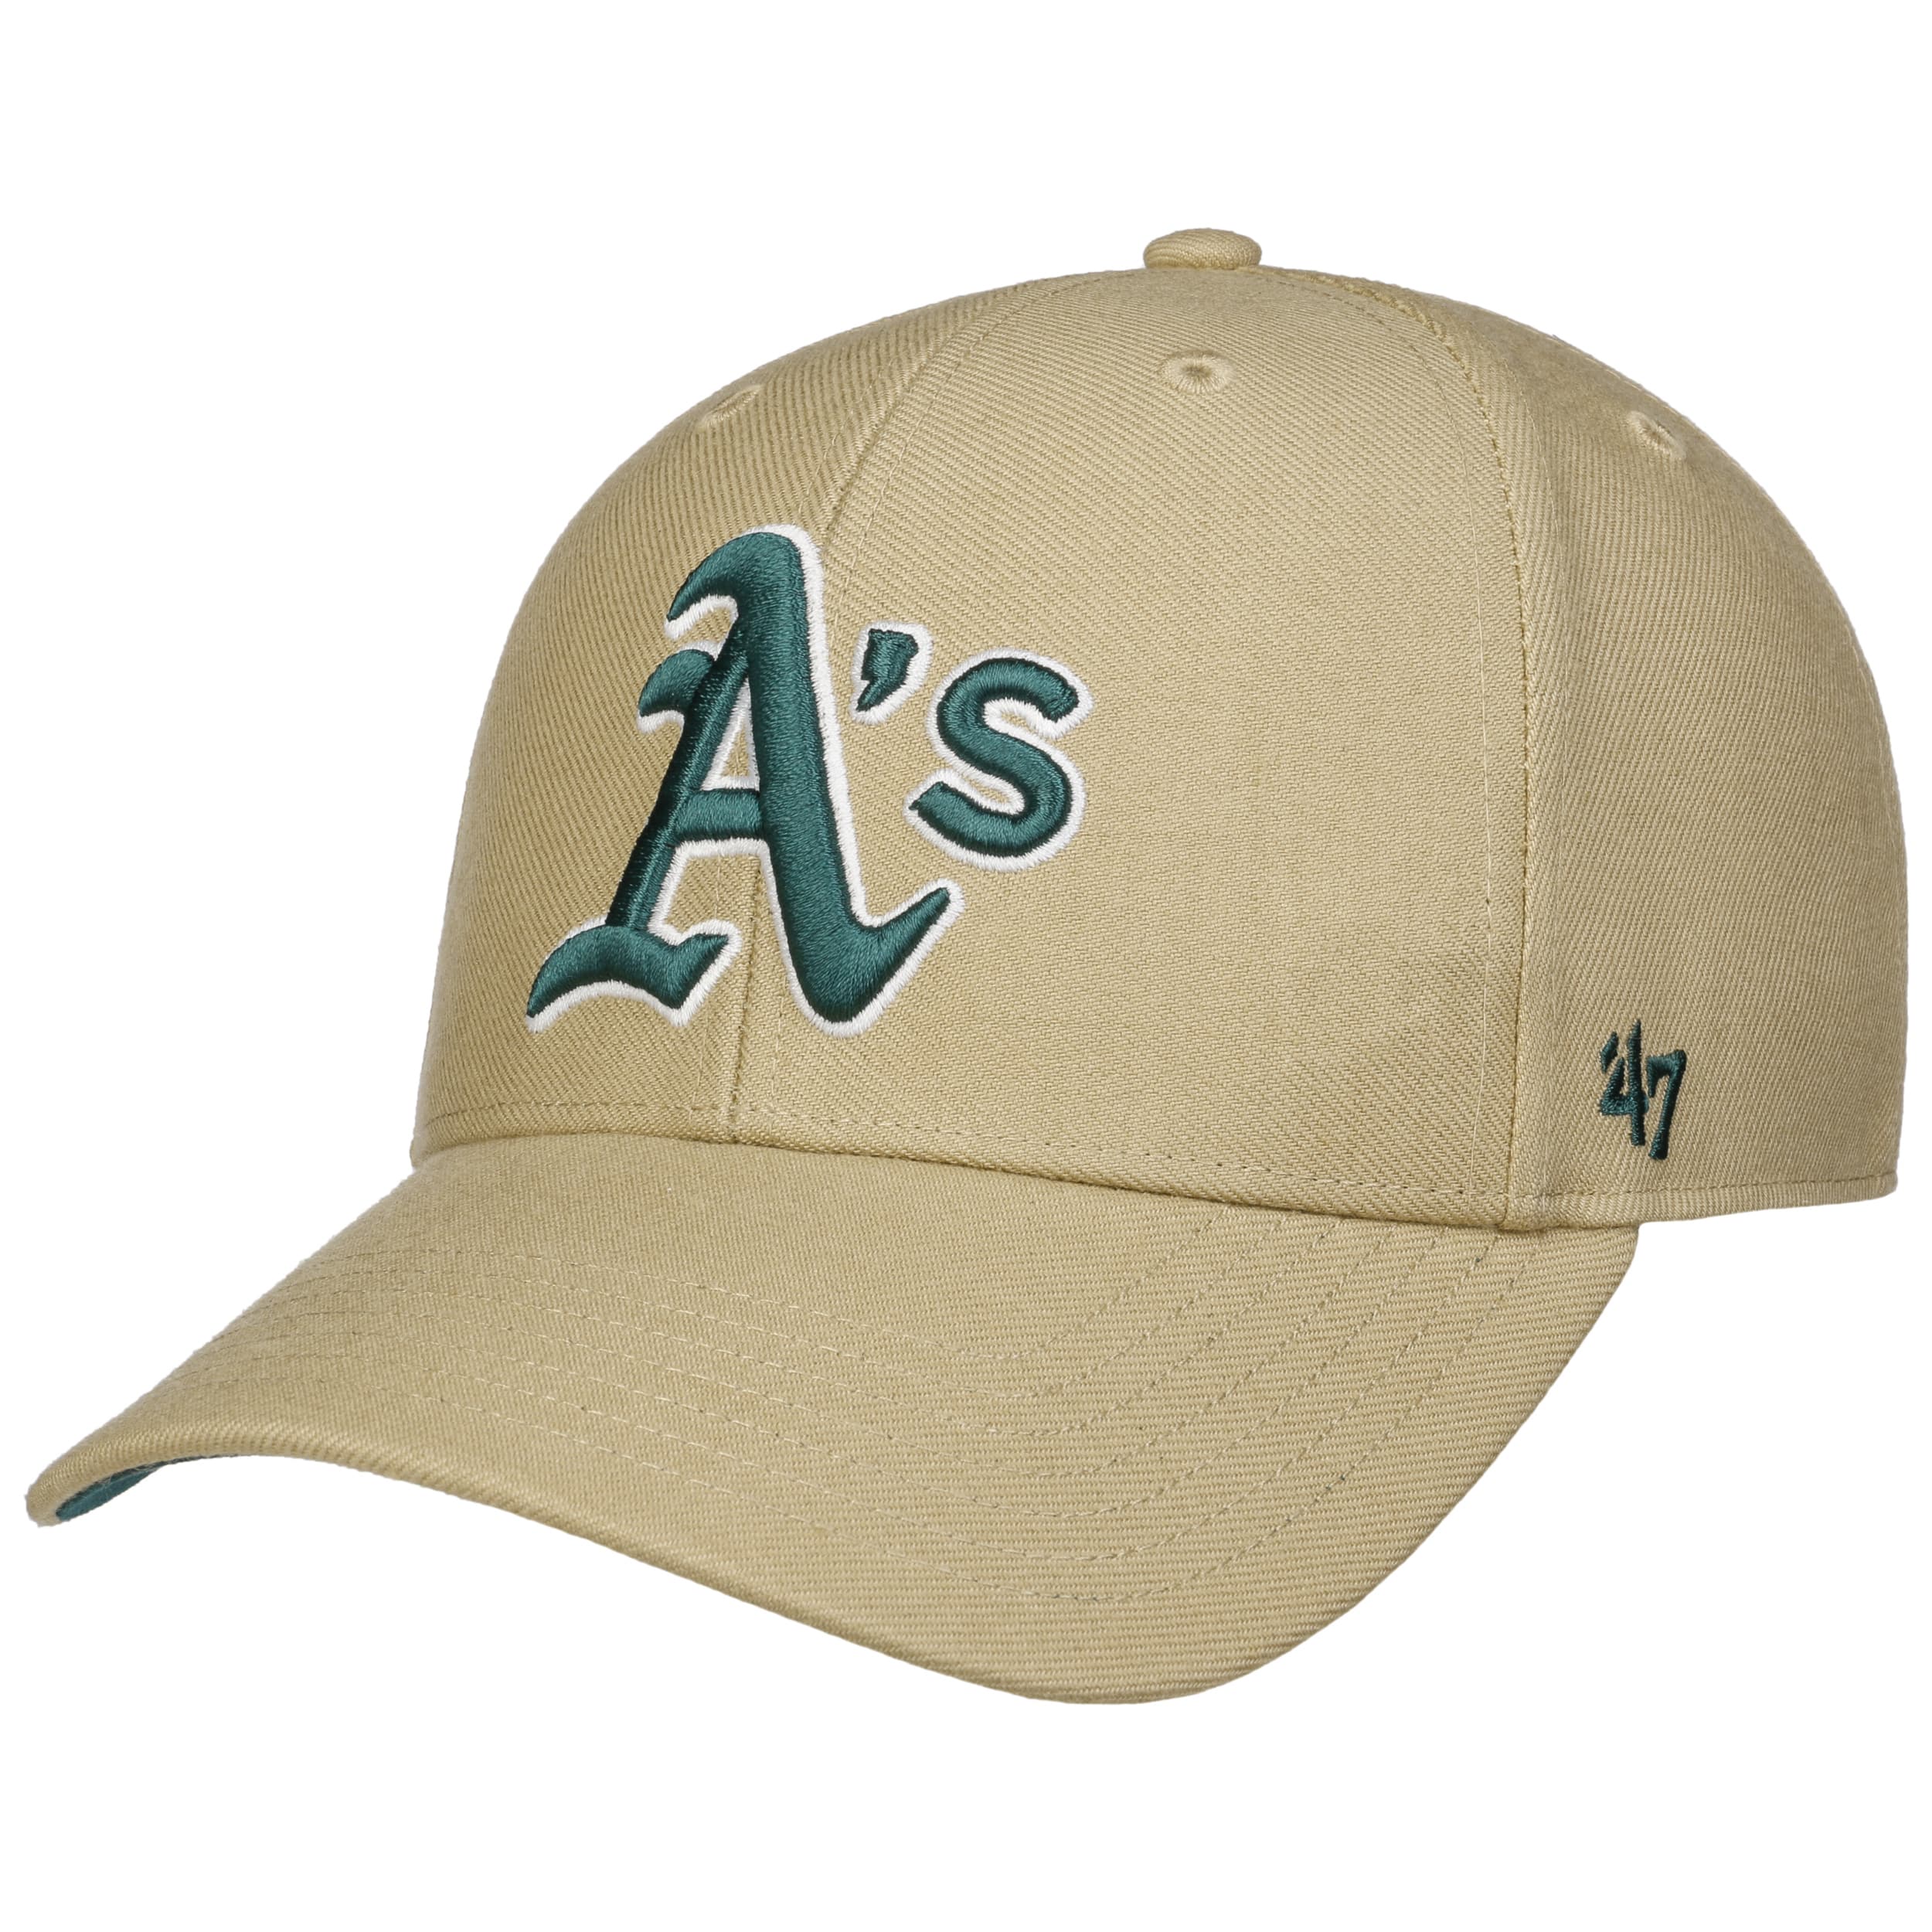 https://img.hatshopping.com/MLB-Oakland-Athletics-Sure-Shot-Cap-by-47-Brand-khaki.66452_rf10.jpg